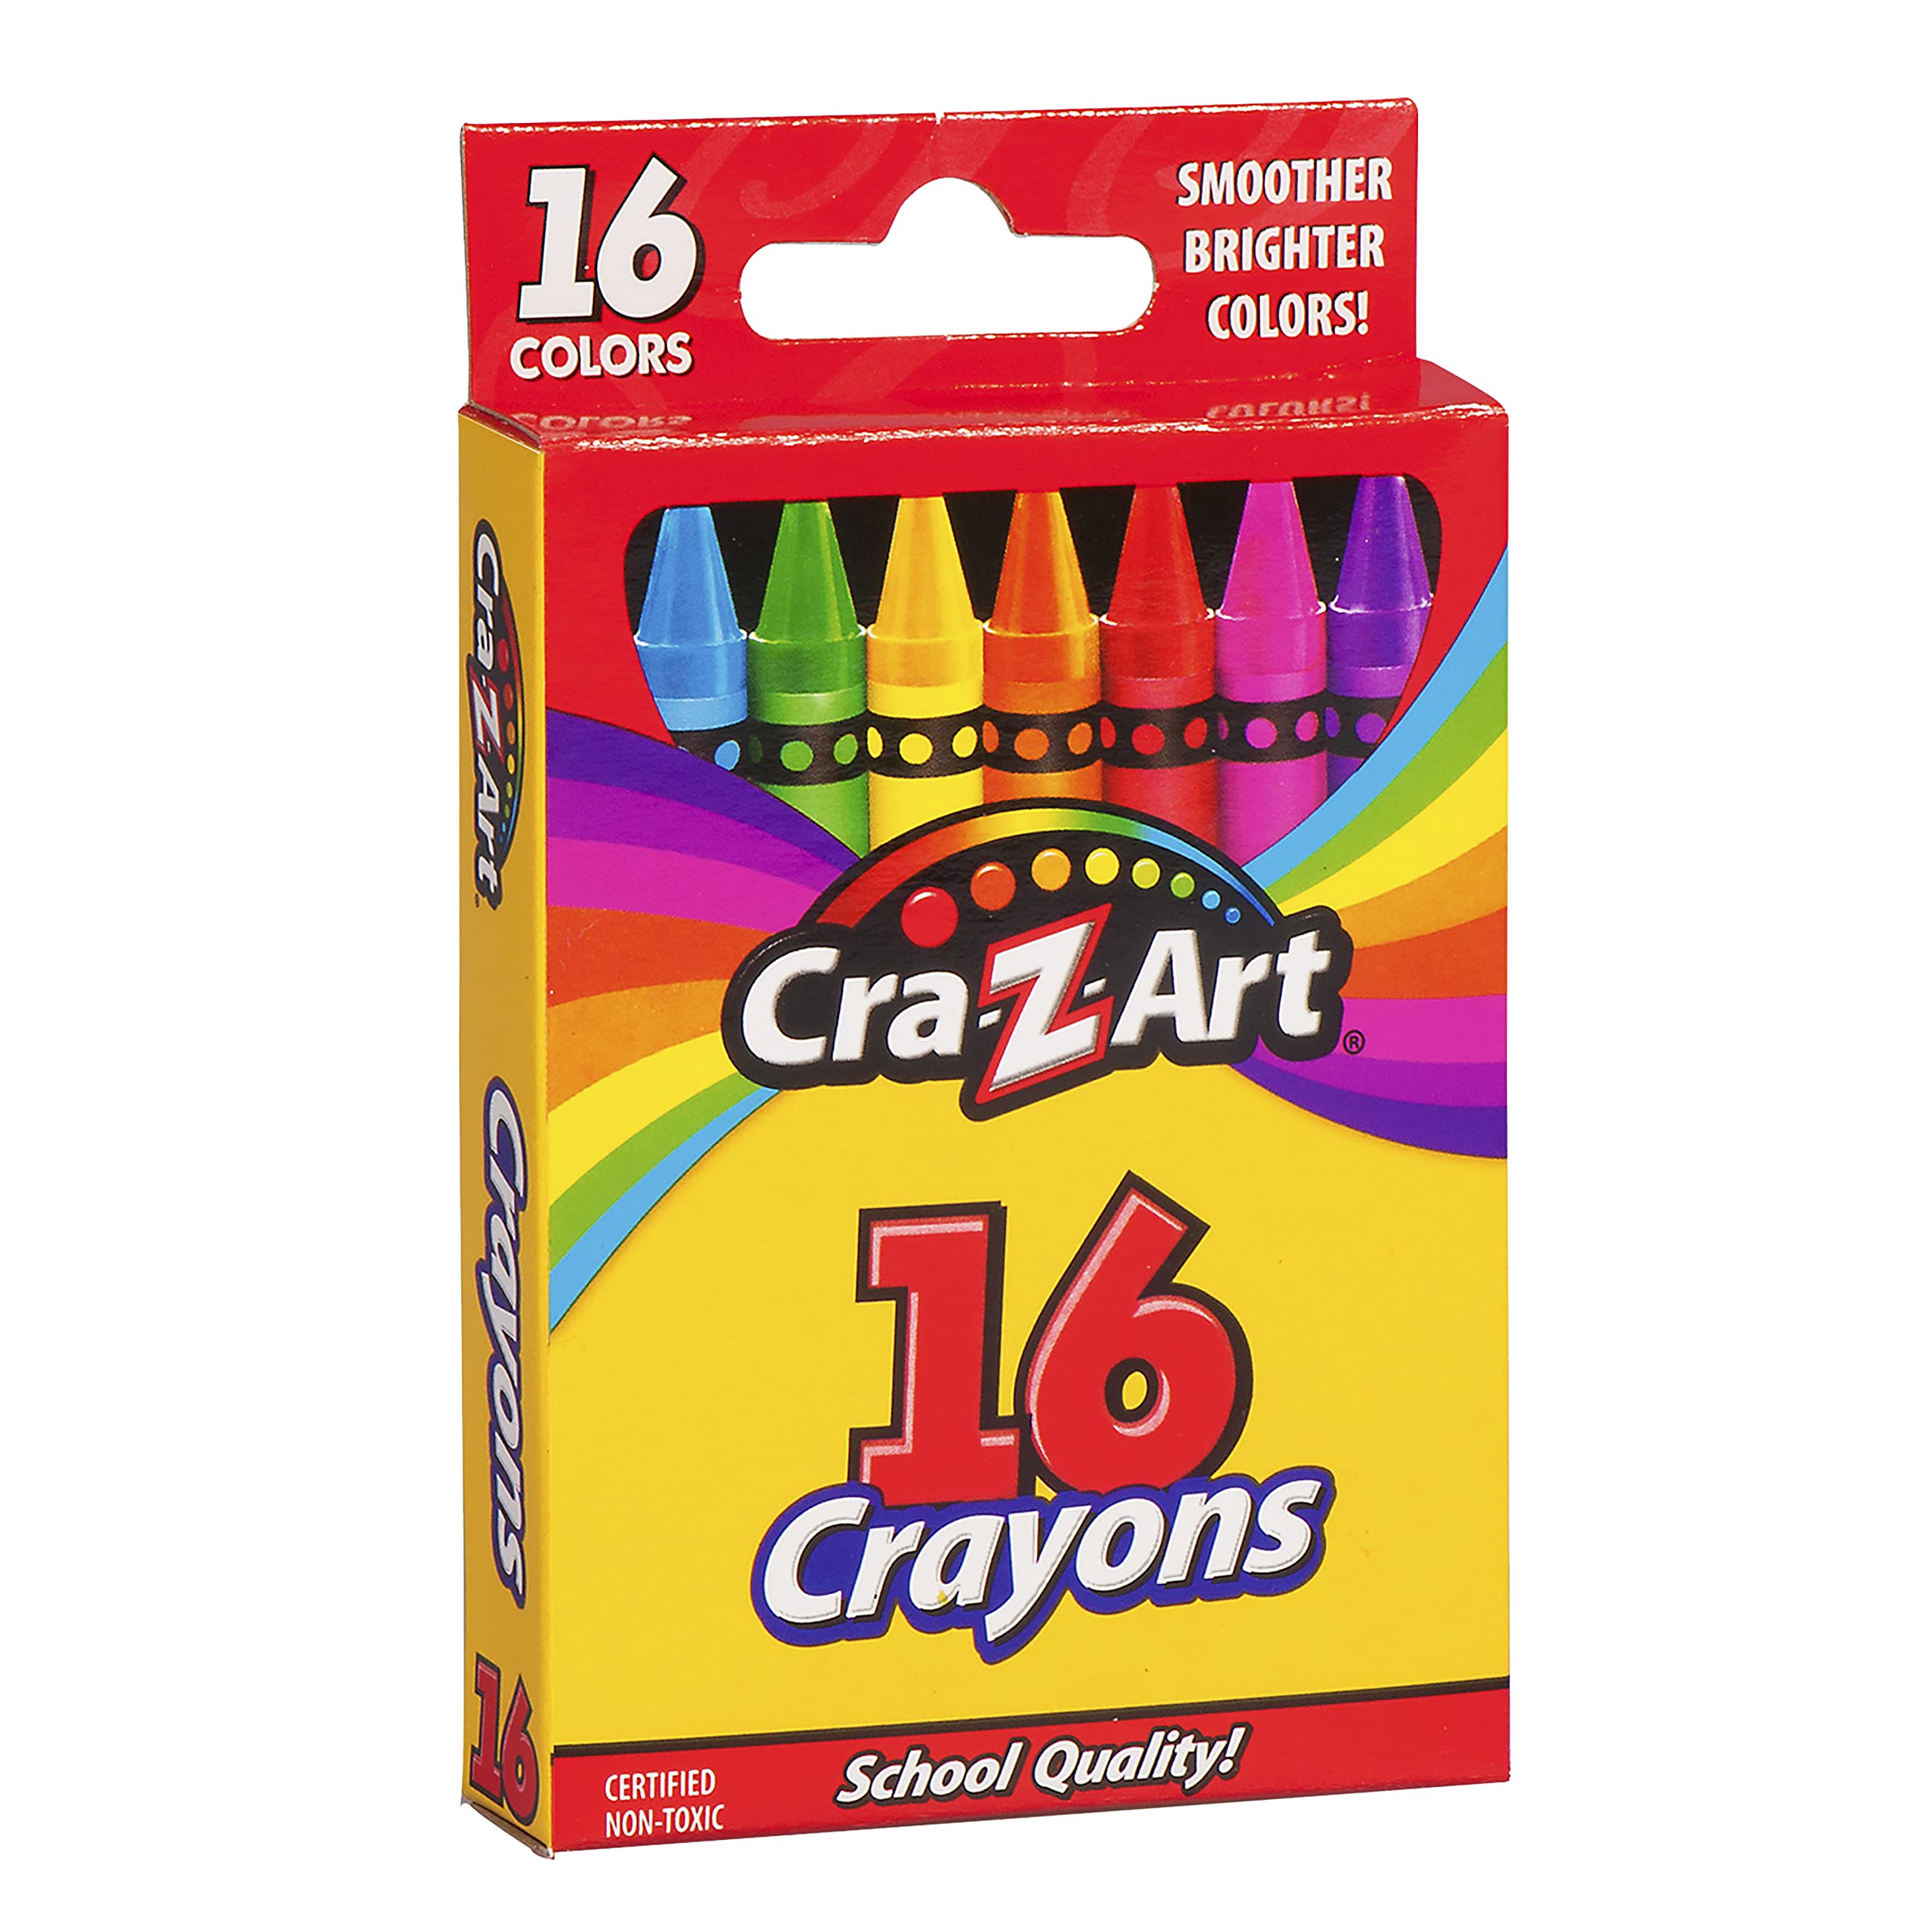 Cra-Z-Art Crayons, 16 Count - $0.63 - Amazon